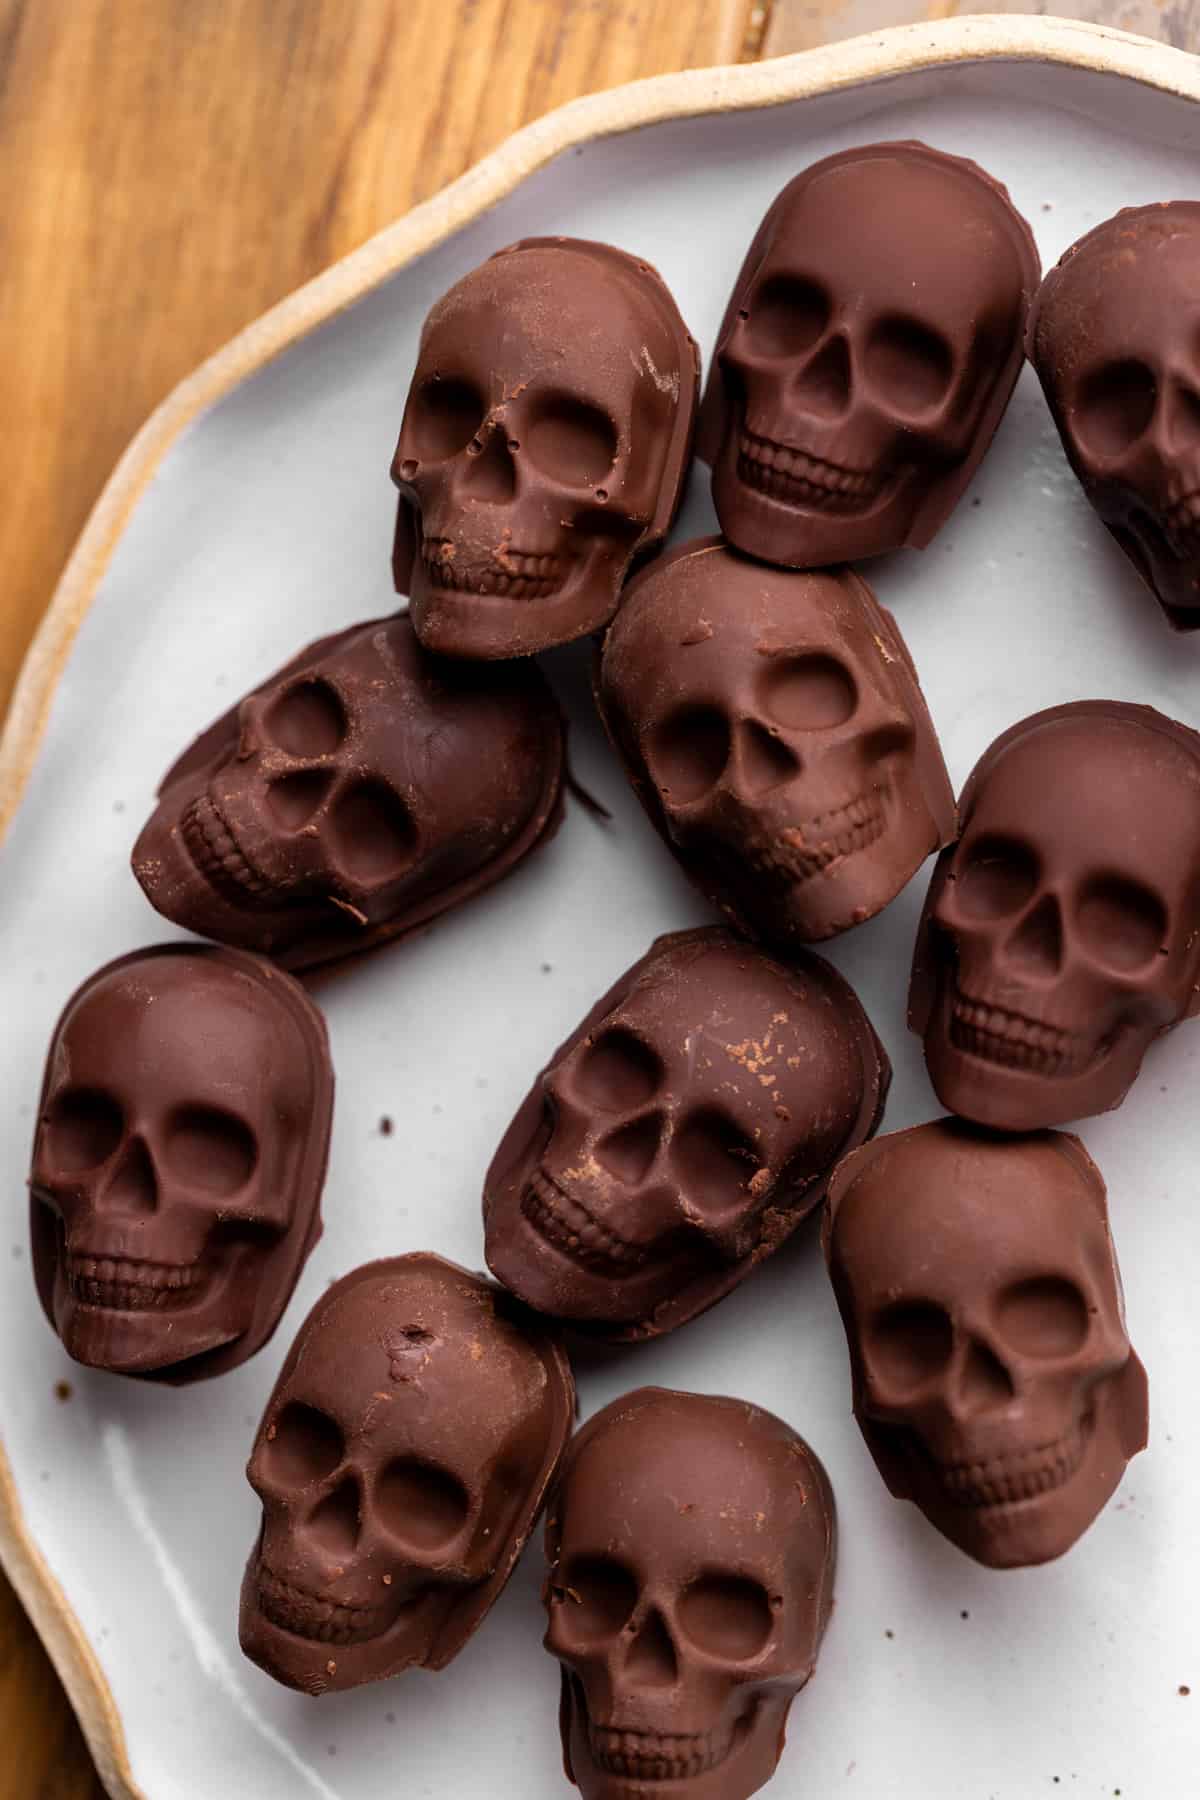 Chocolate skulls on a plate.